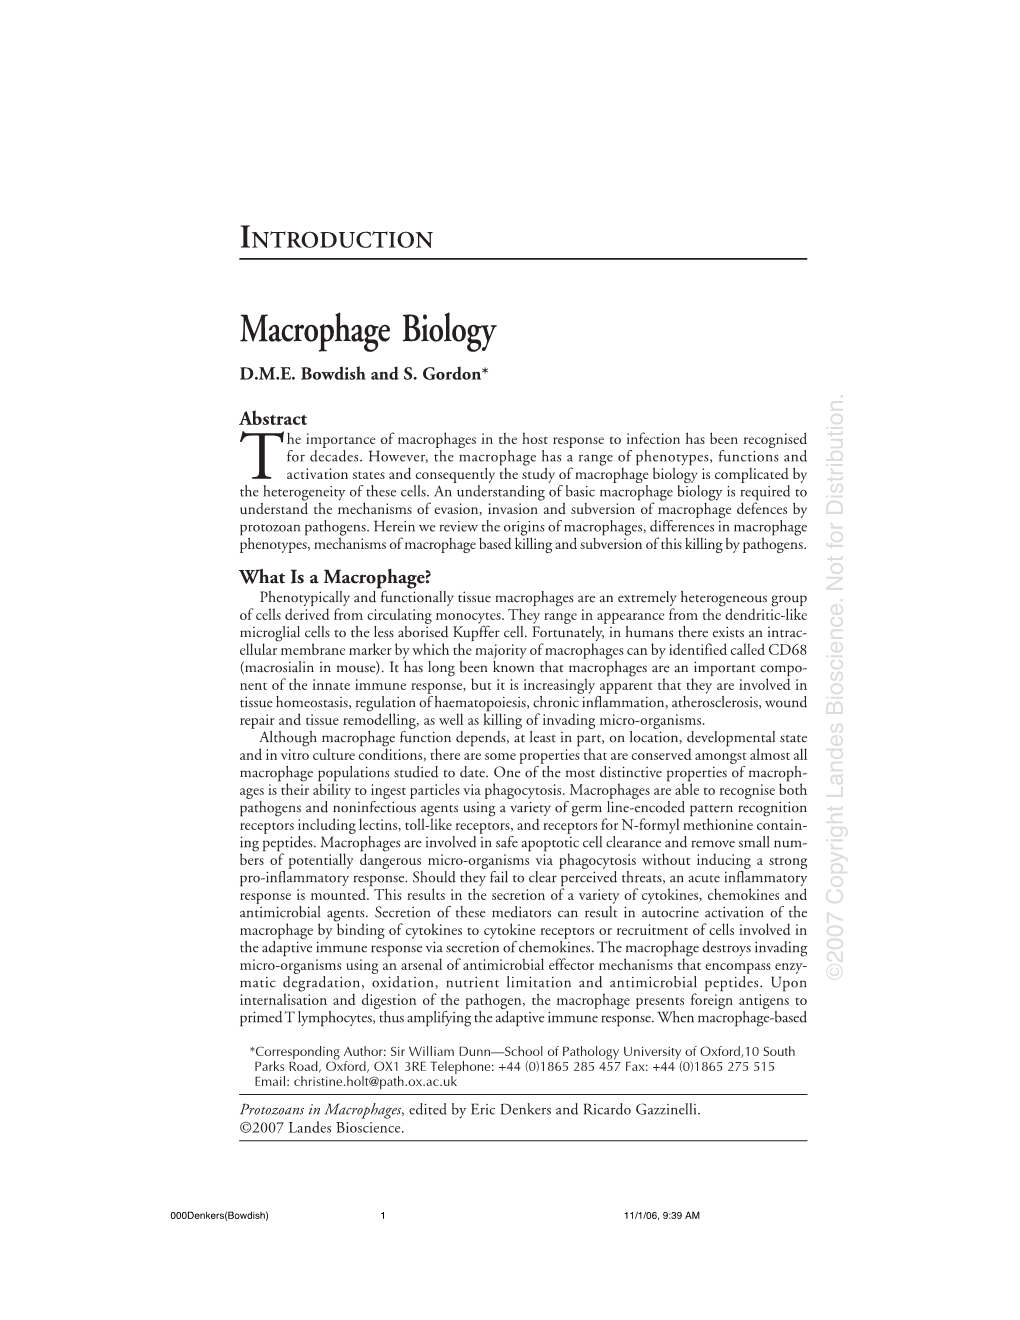 Macrophage Biology D.M.E